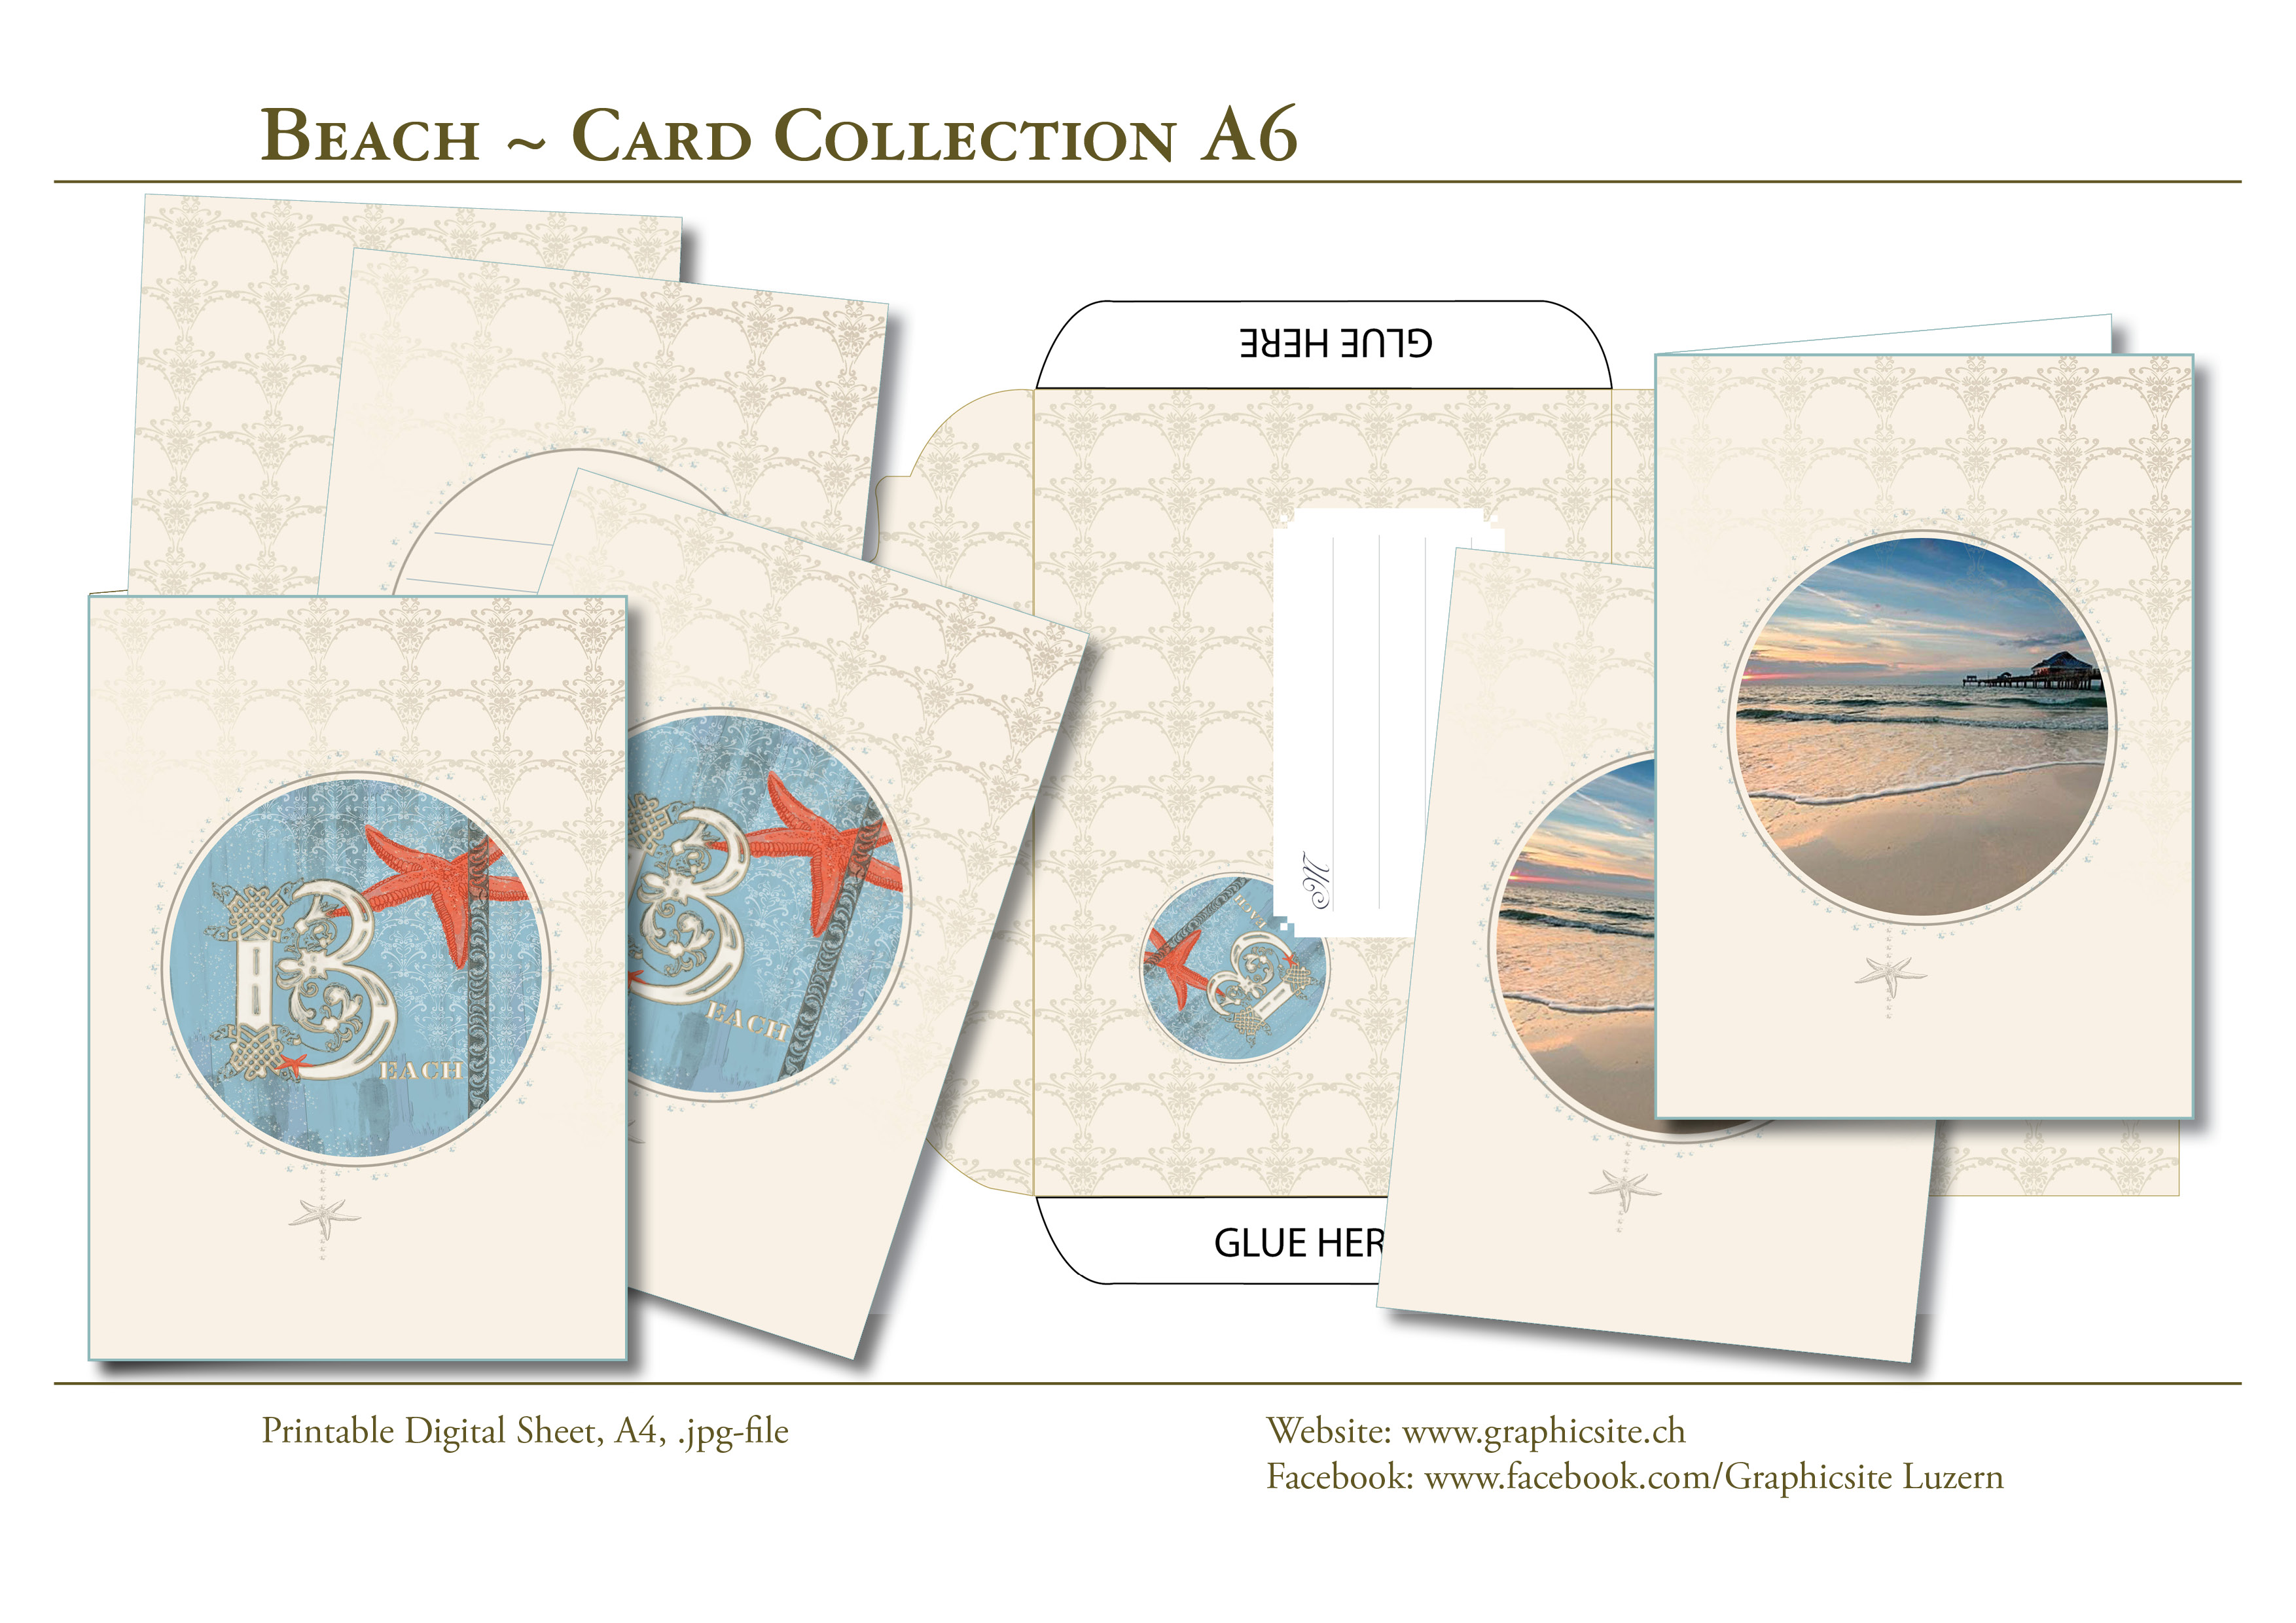 Printable Digital Sheets - DIN A-Formats - Beach_CardCollection - GreetingCards, Beach, Sea, Starfish, Envelope, Graphic Design, Luzern, Schweiz,